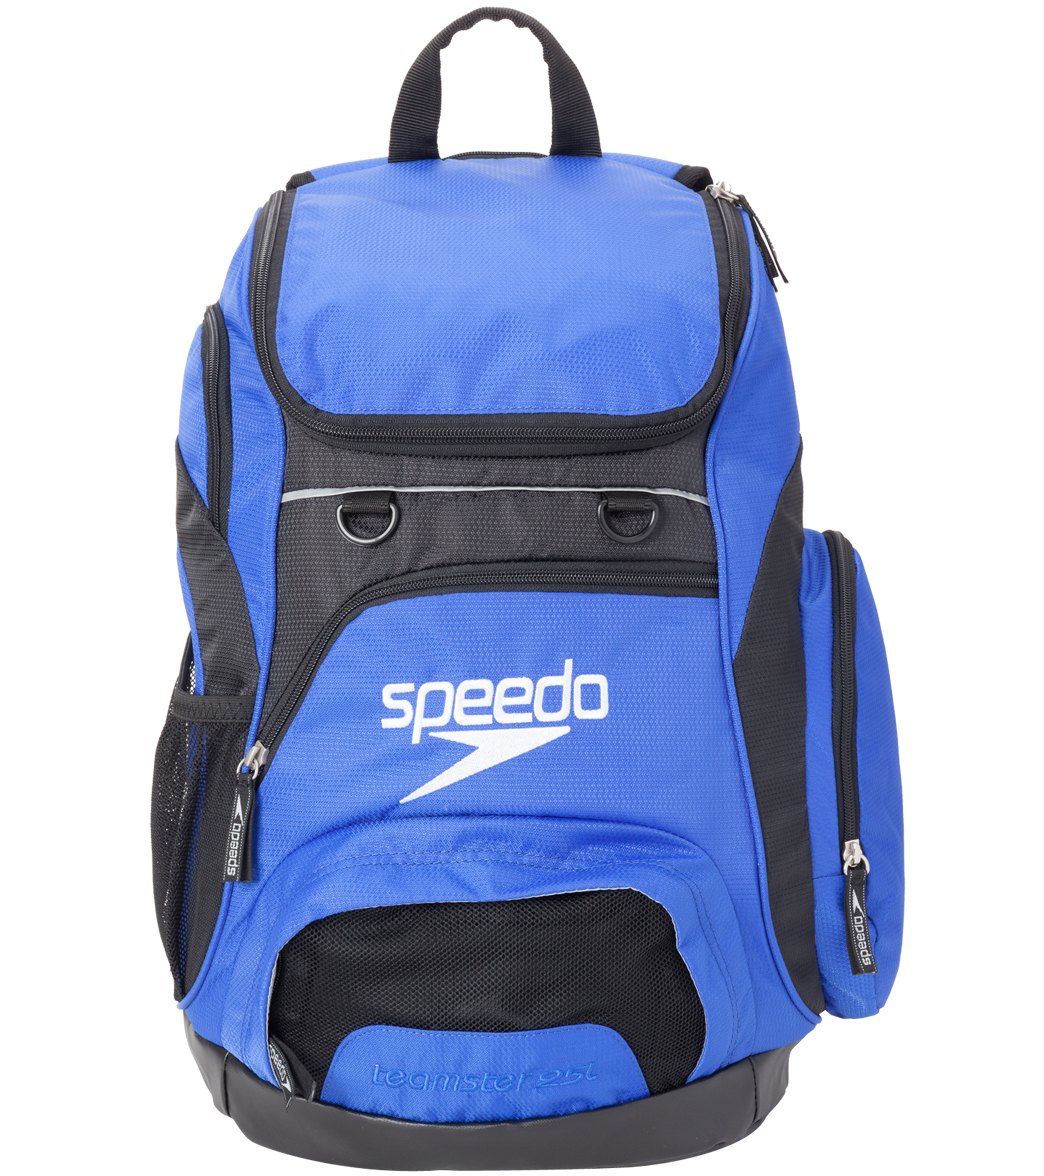 Speedo Teamster 25L Backpack » Go Time Athletics